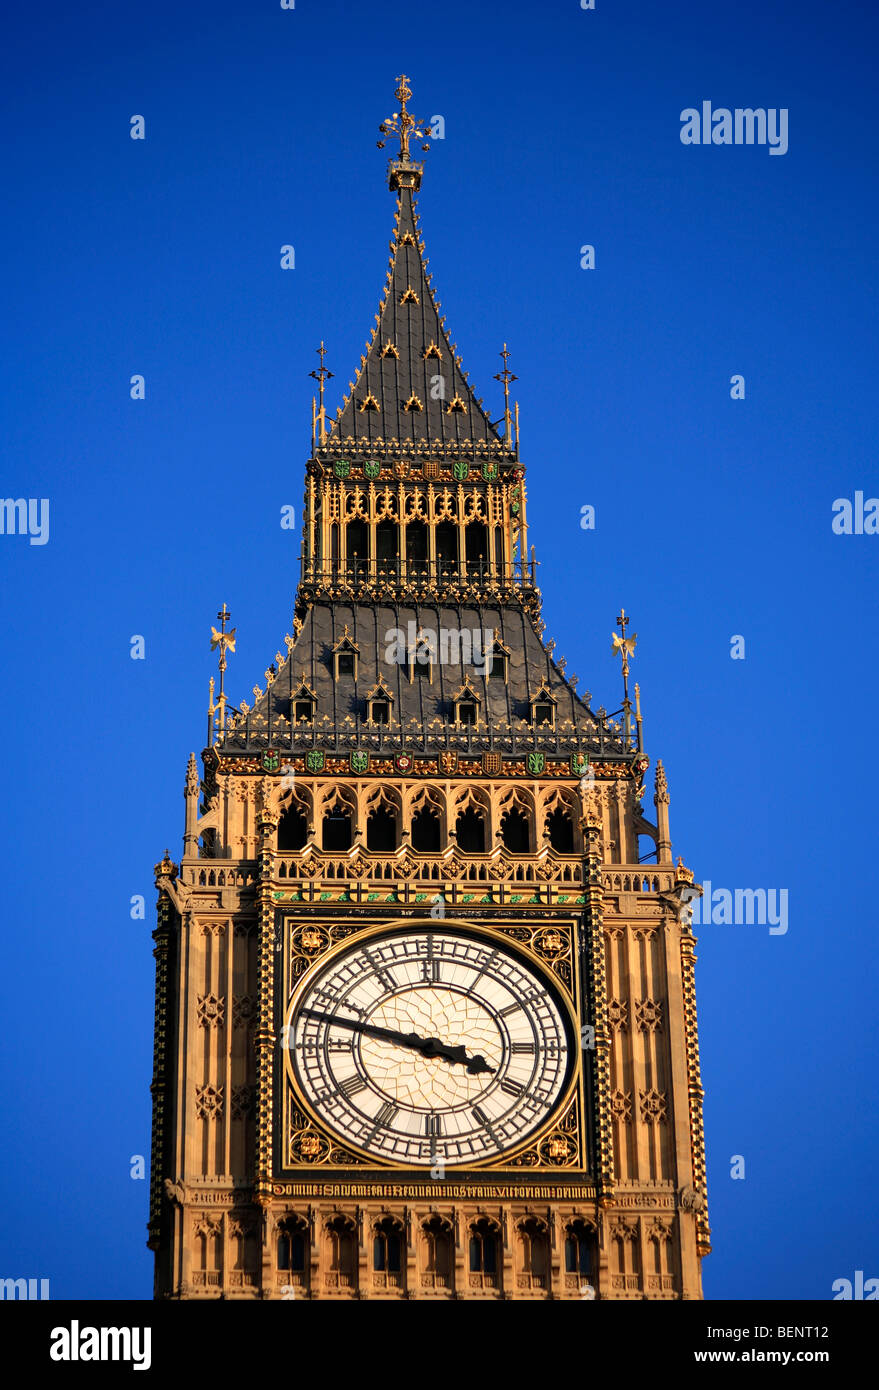 Ziffernblatt Big Ben St. Stephen's Tower Parlament Gebäude Westminster London City England UK Stockfoto